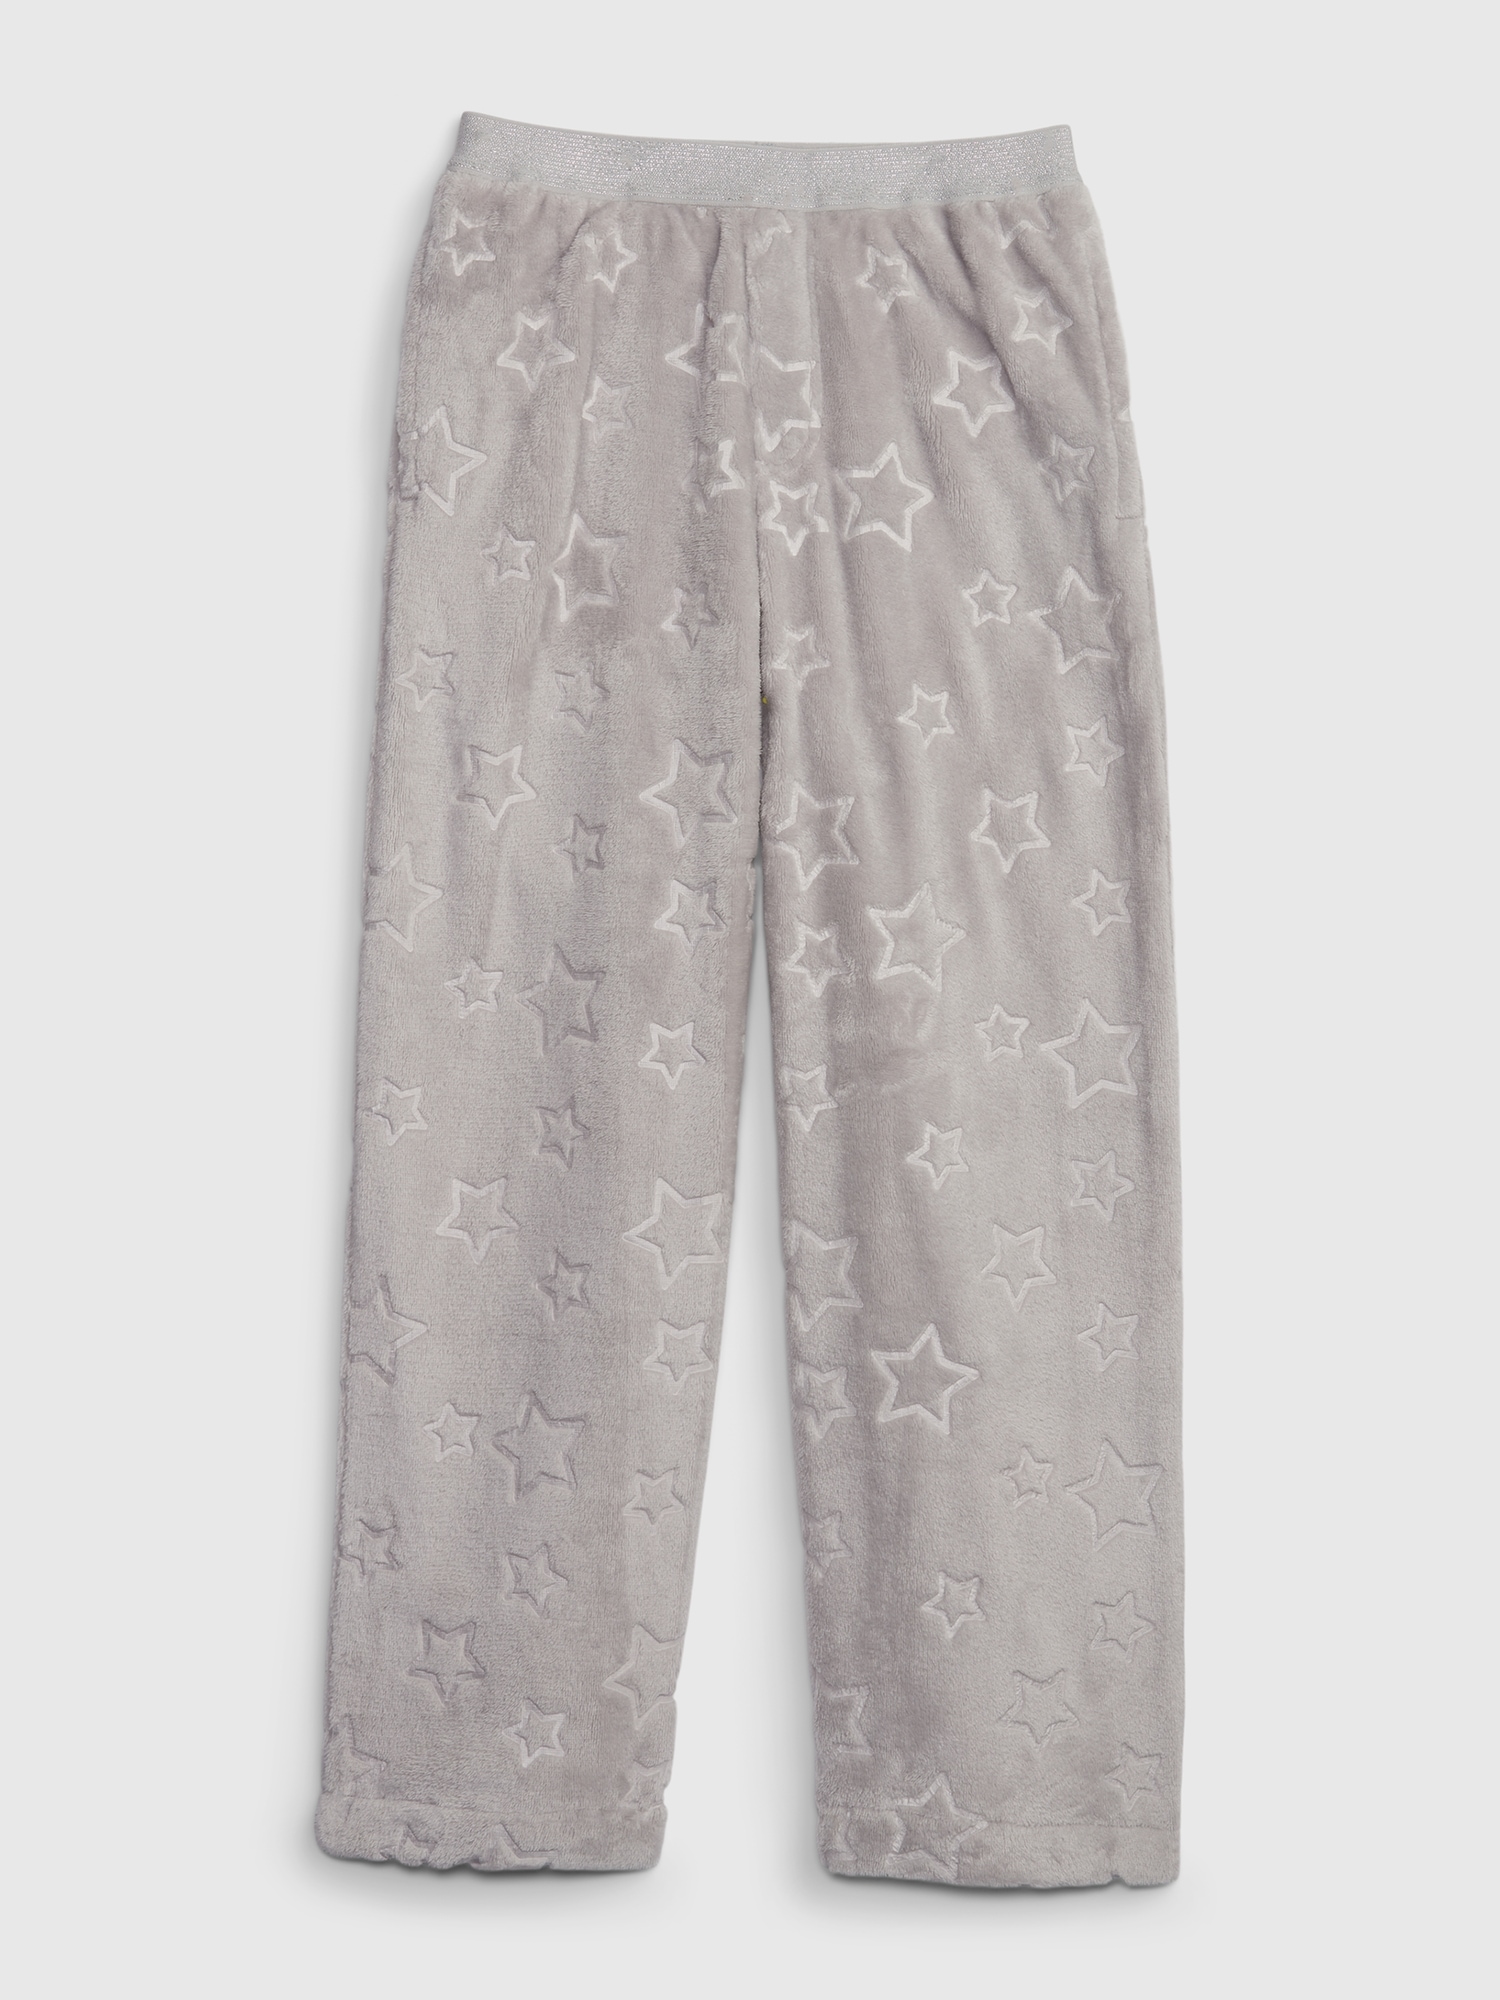 Pajamas pants Women Pajama Pants Flannel Pants -Lounge Pants S-XXL-10  Holiday plaid colors | Cute outfits with leggings, Flannel women, Cotton pajama  pants